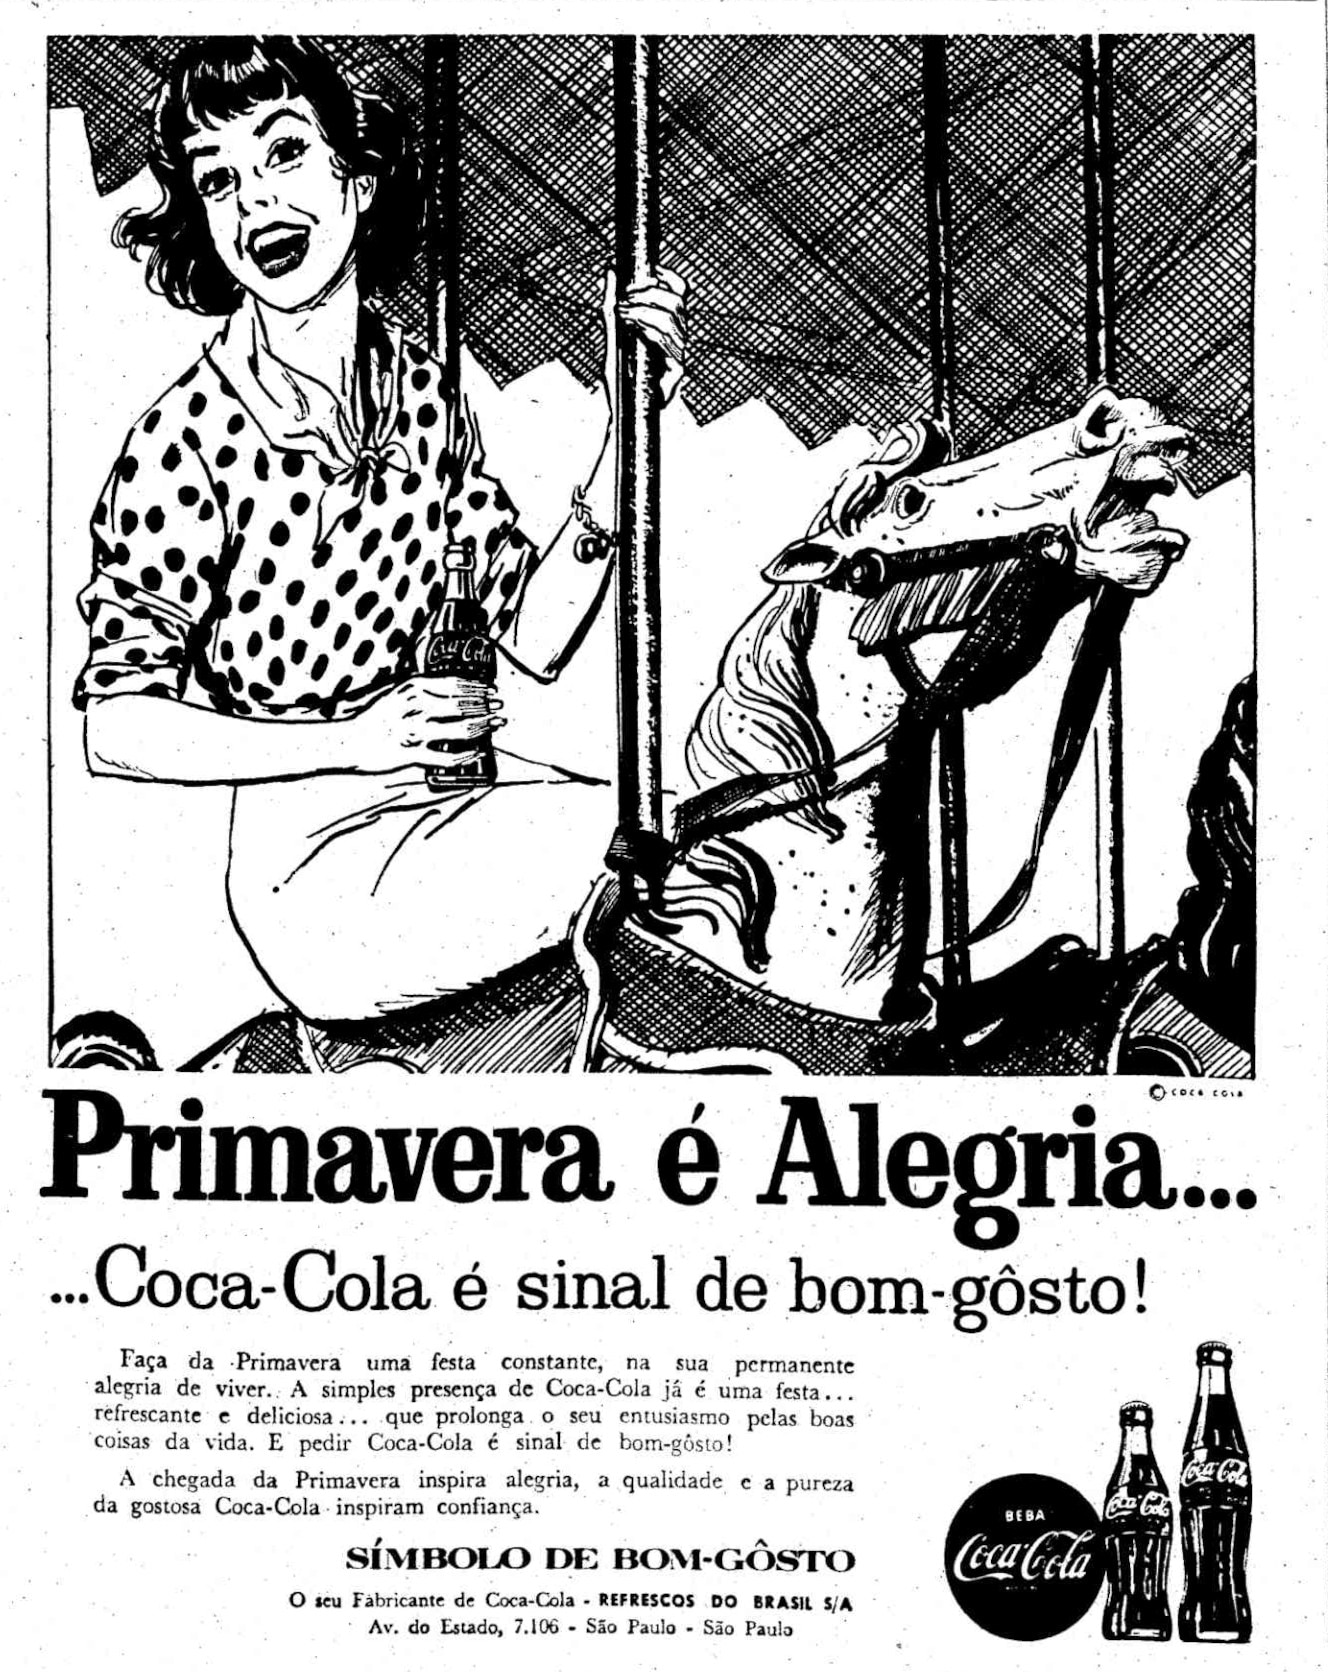 Anúncio Lojas Ducal - 1973  Jogo da moda, Propagandas vintage, Anúncios  antigos